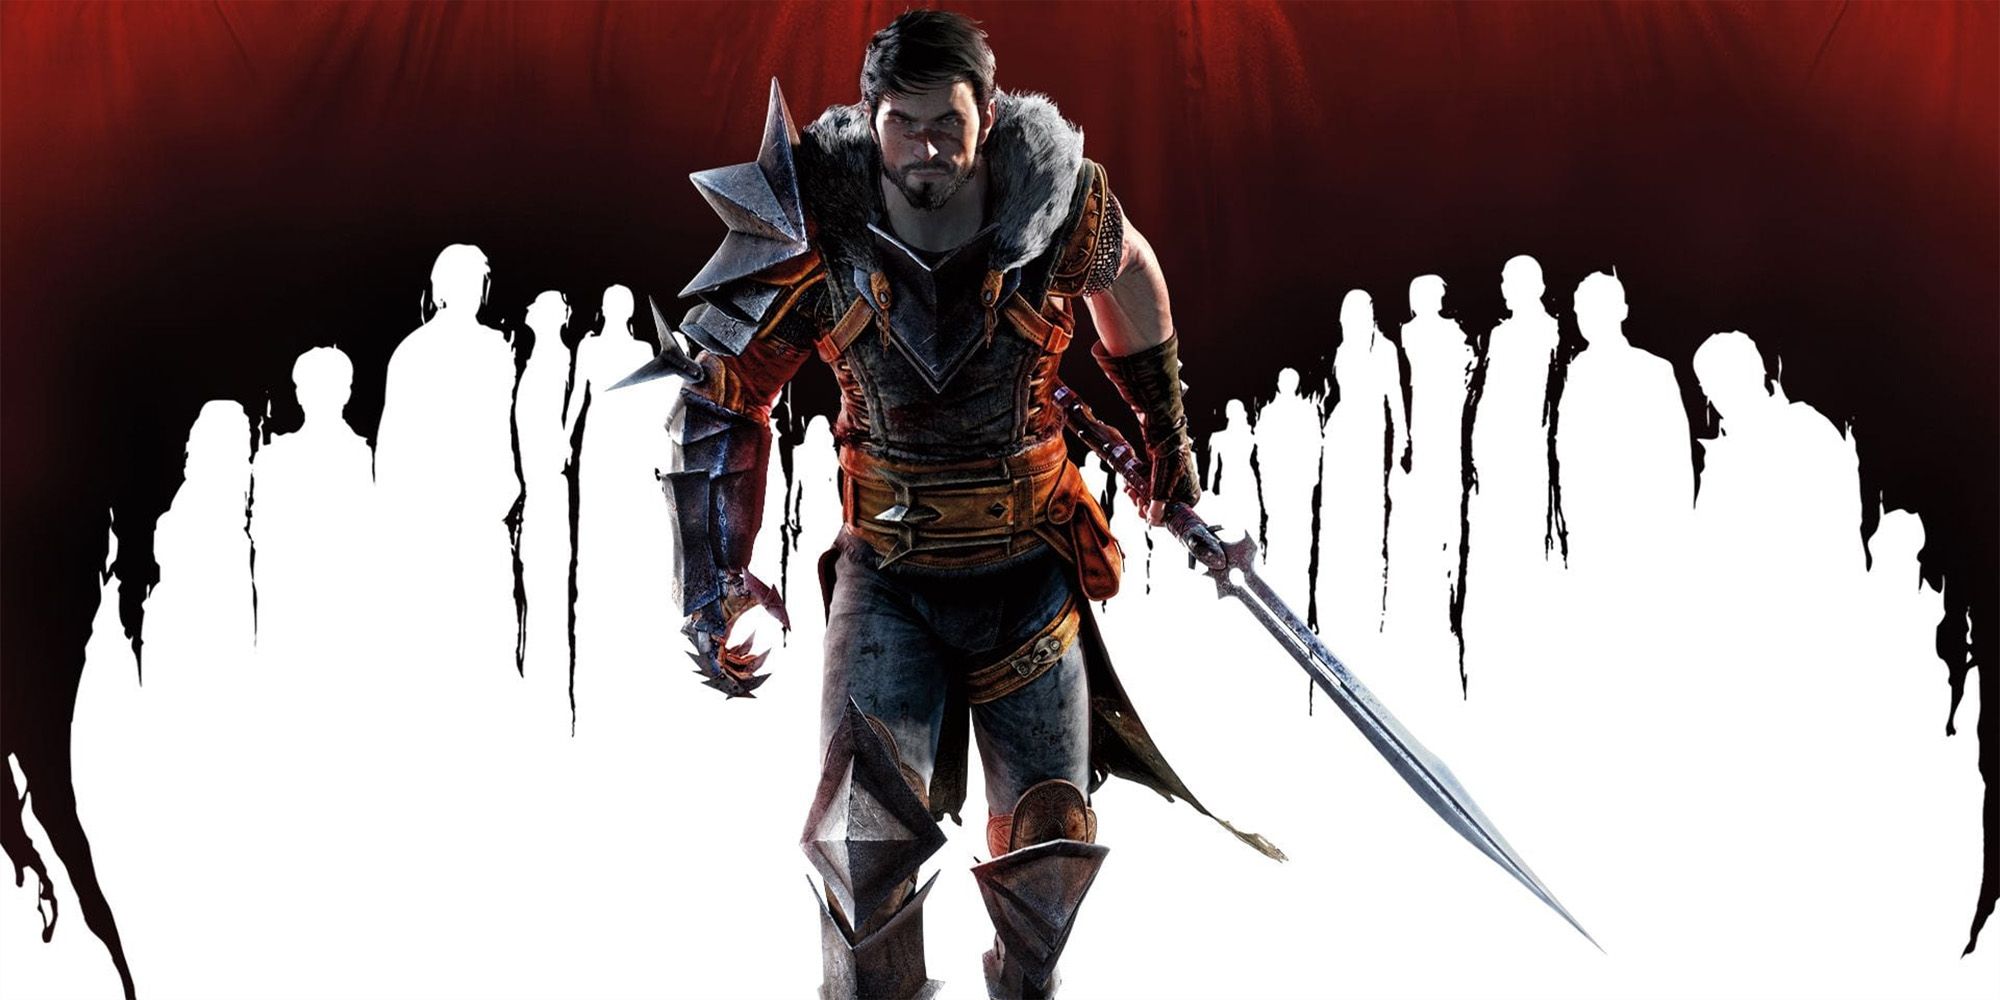 A male Hawke in Dragon Age II advances, sword in hand.